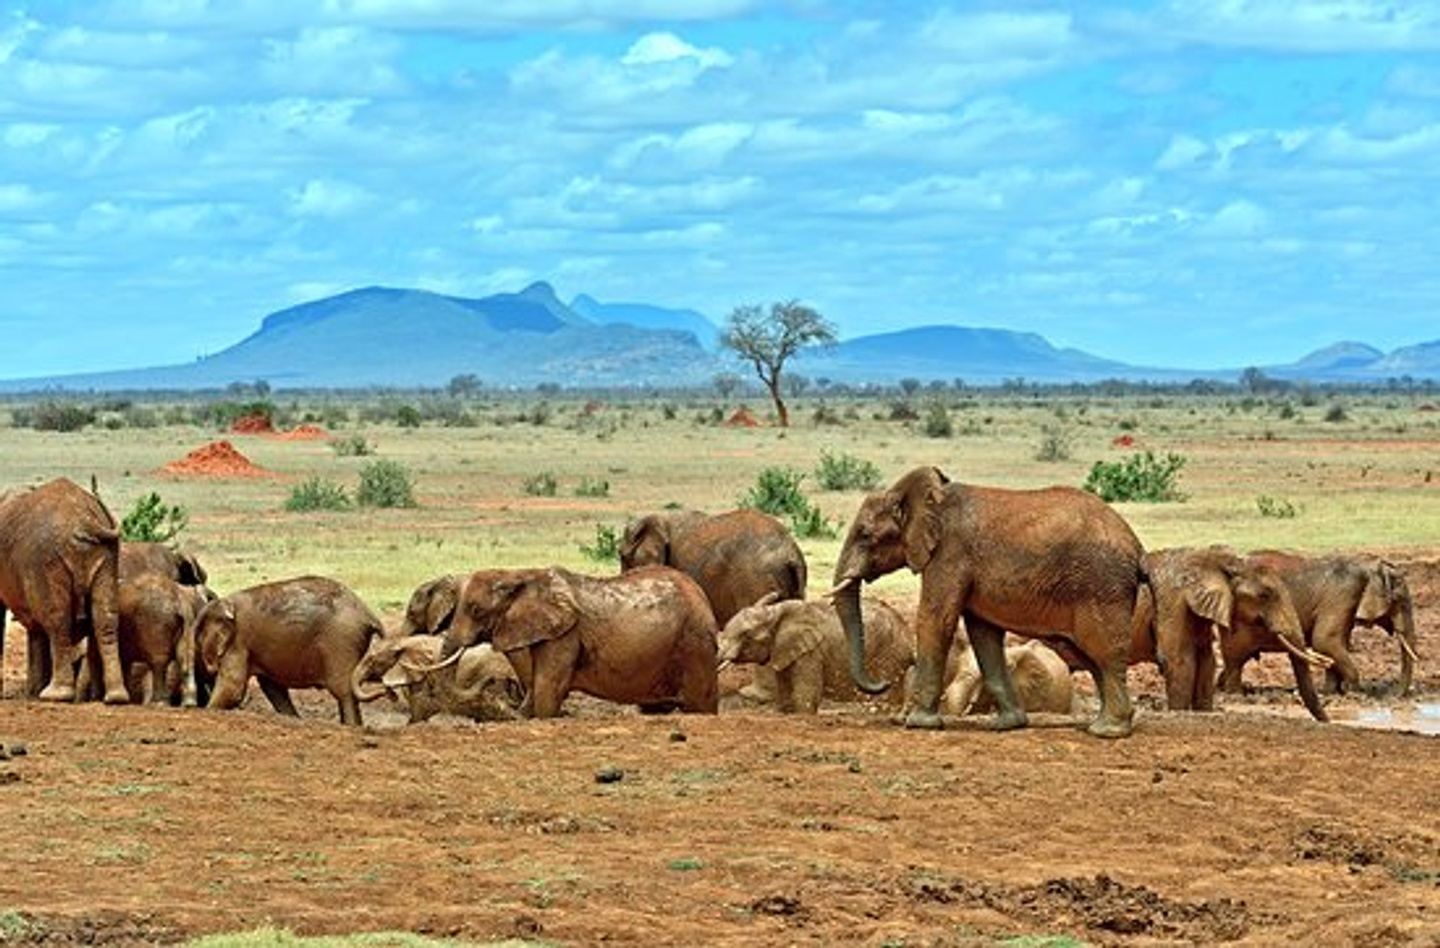 Kenya - 1  Day Tsavo East National Park - The Lunatic Express